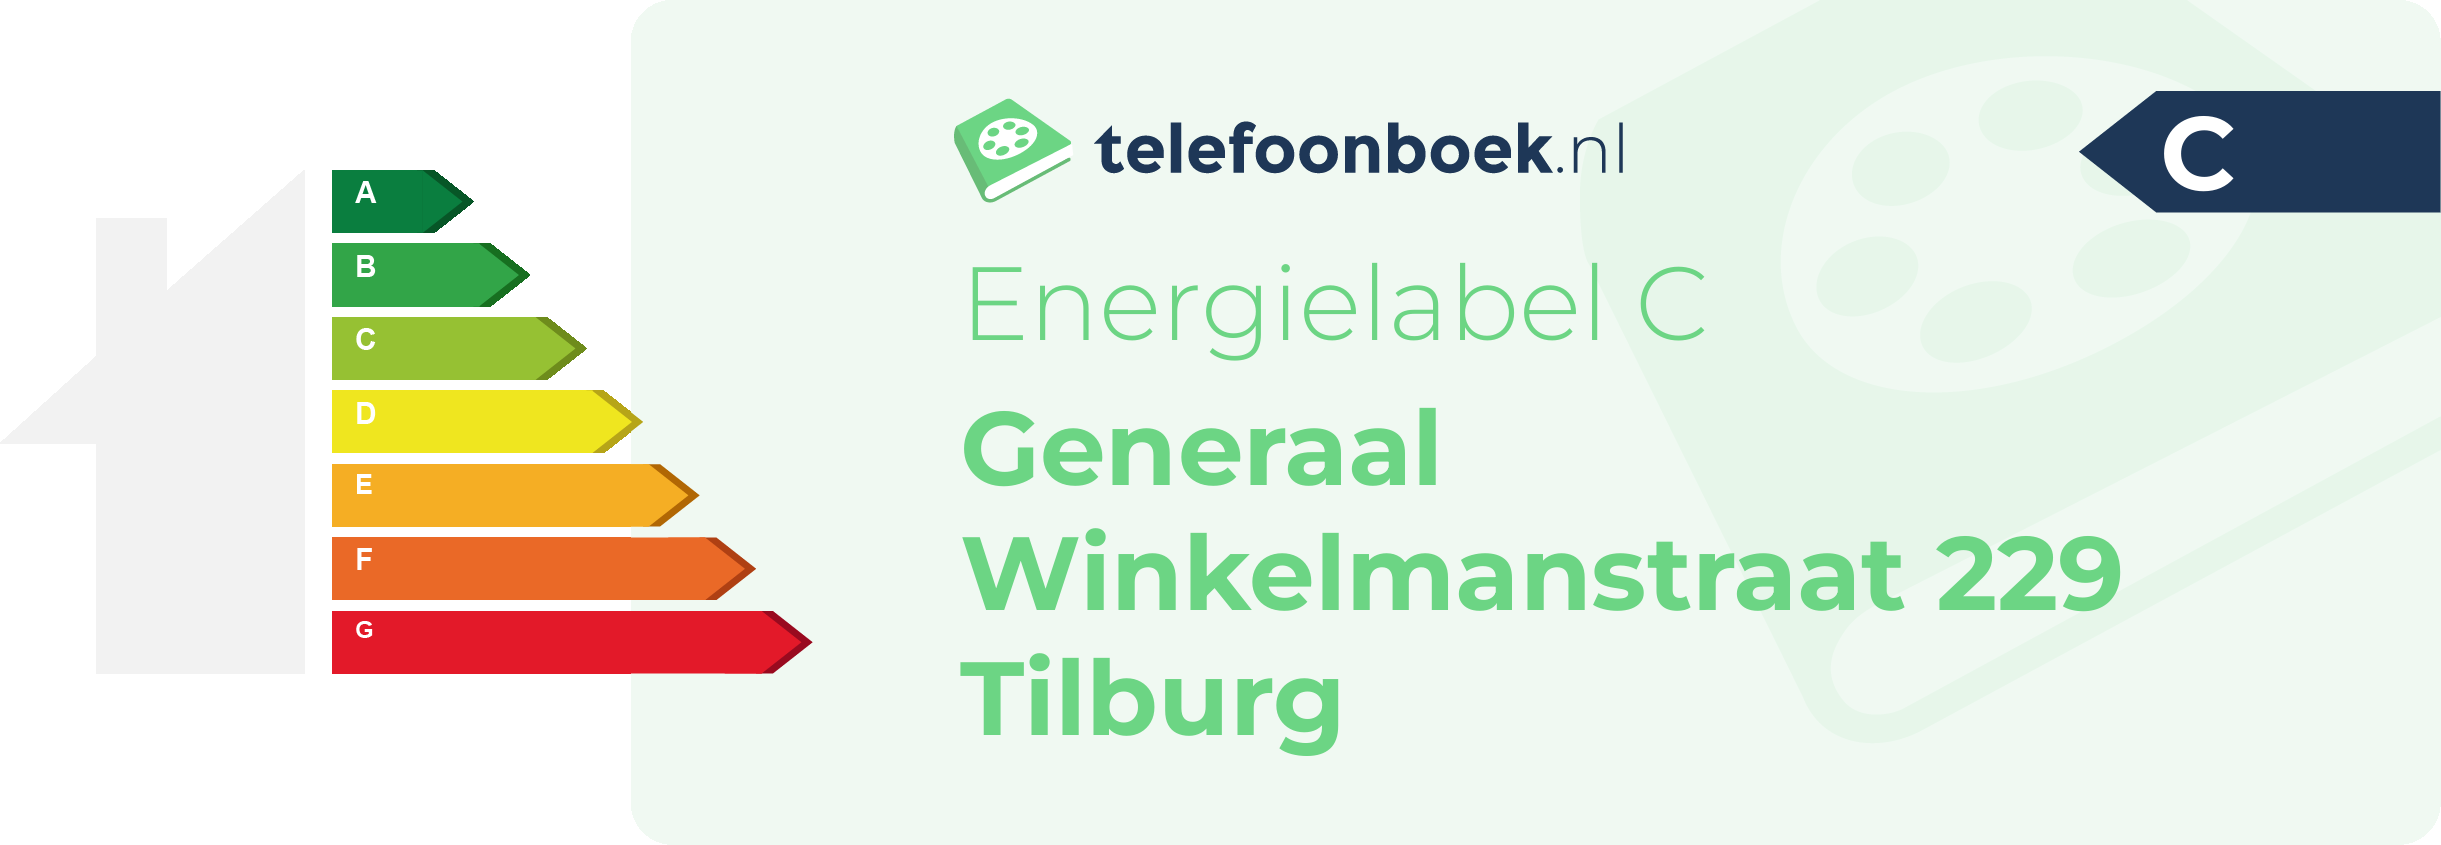 Energielabel Generaal Winkelmanstraat 229 Tilburg